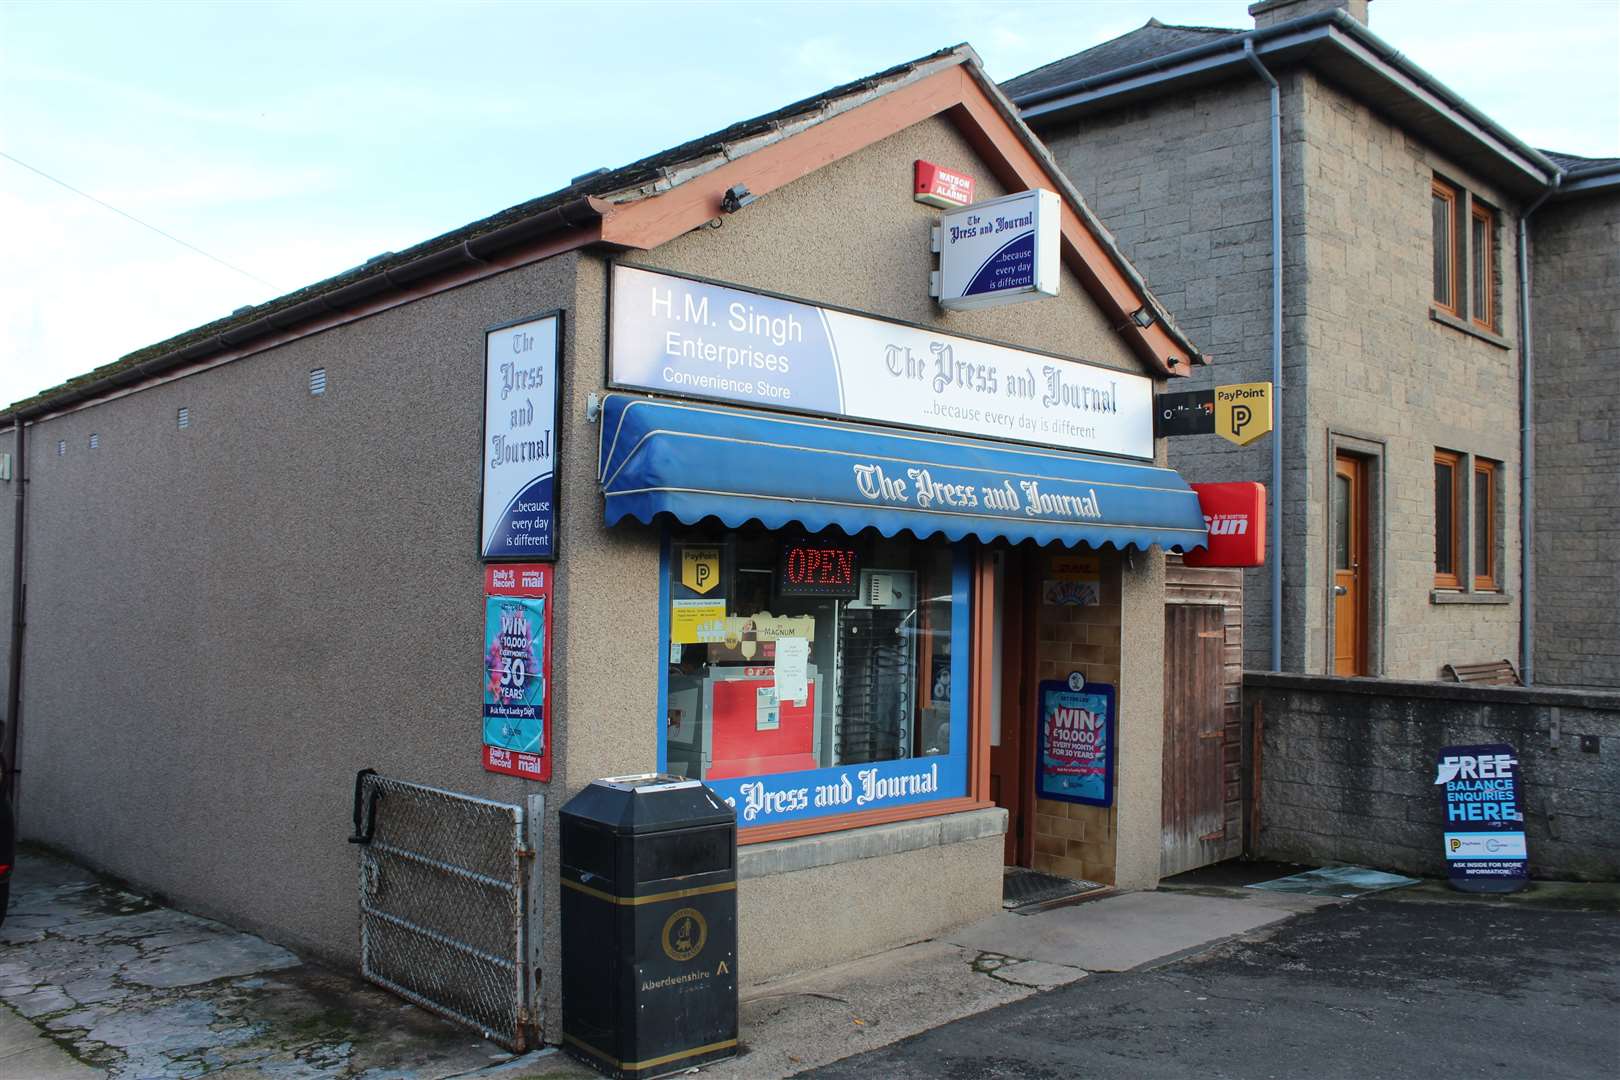 The Port Elphinstone paper shop was broken into.